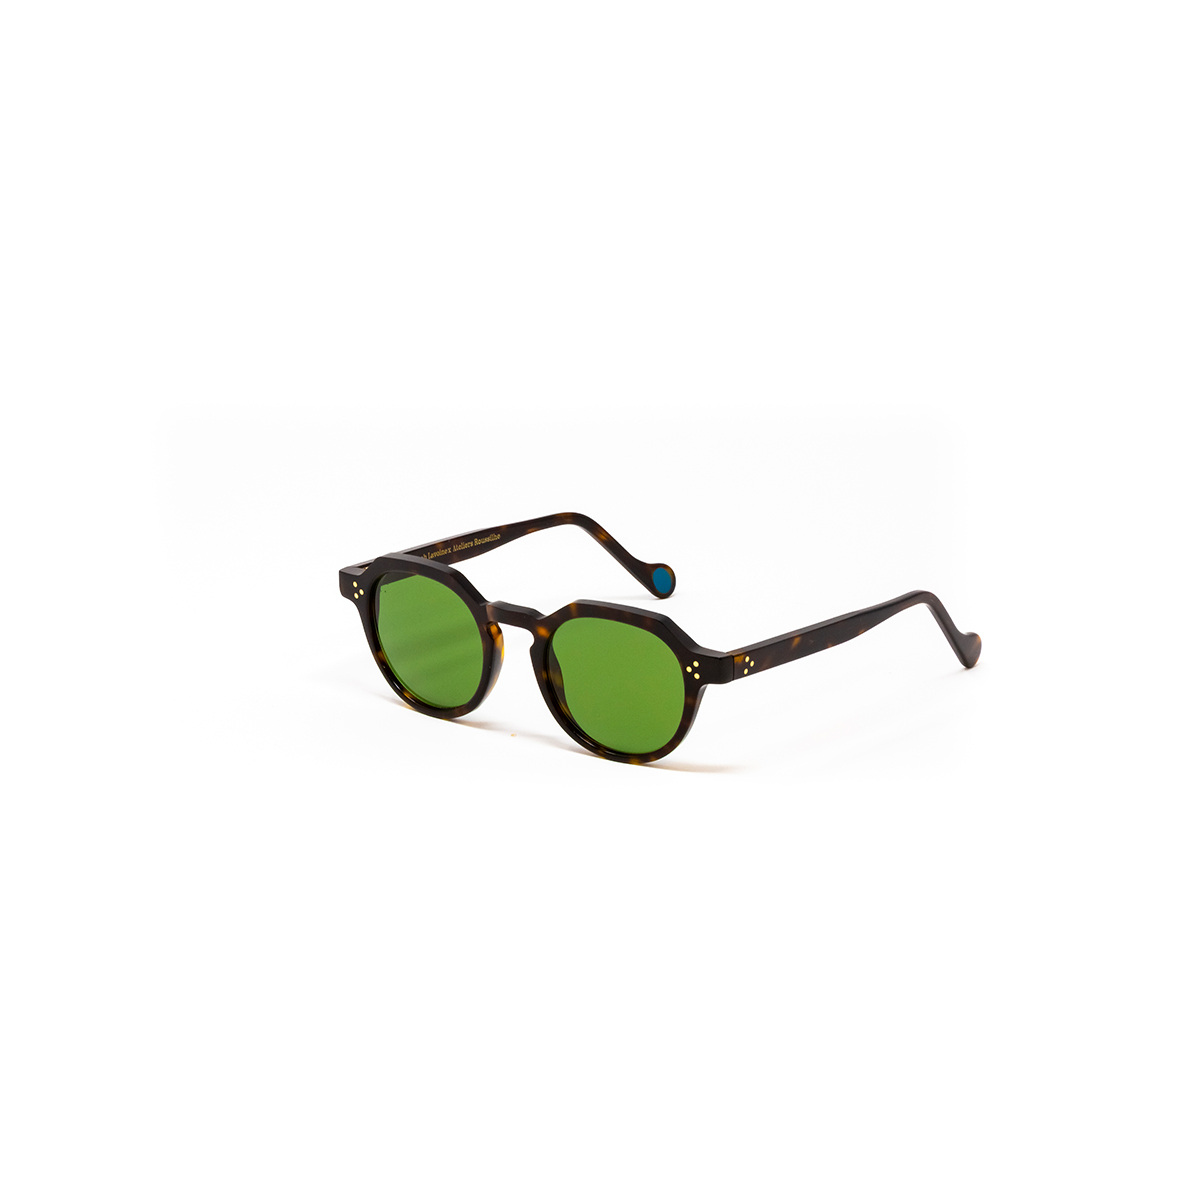 Sunglasses Eddy, Dark scale - Size 48-20 - Organic acetate - image 1